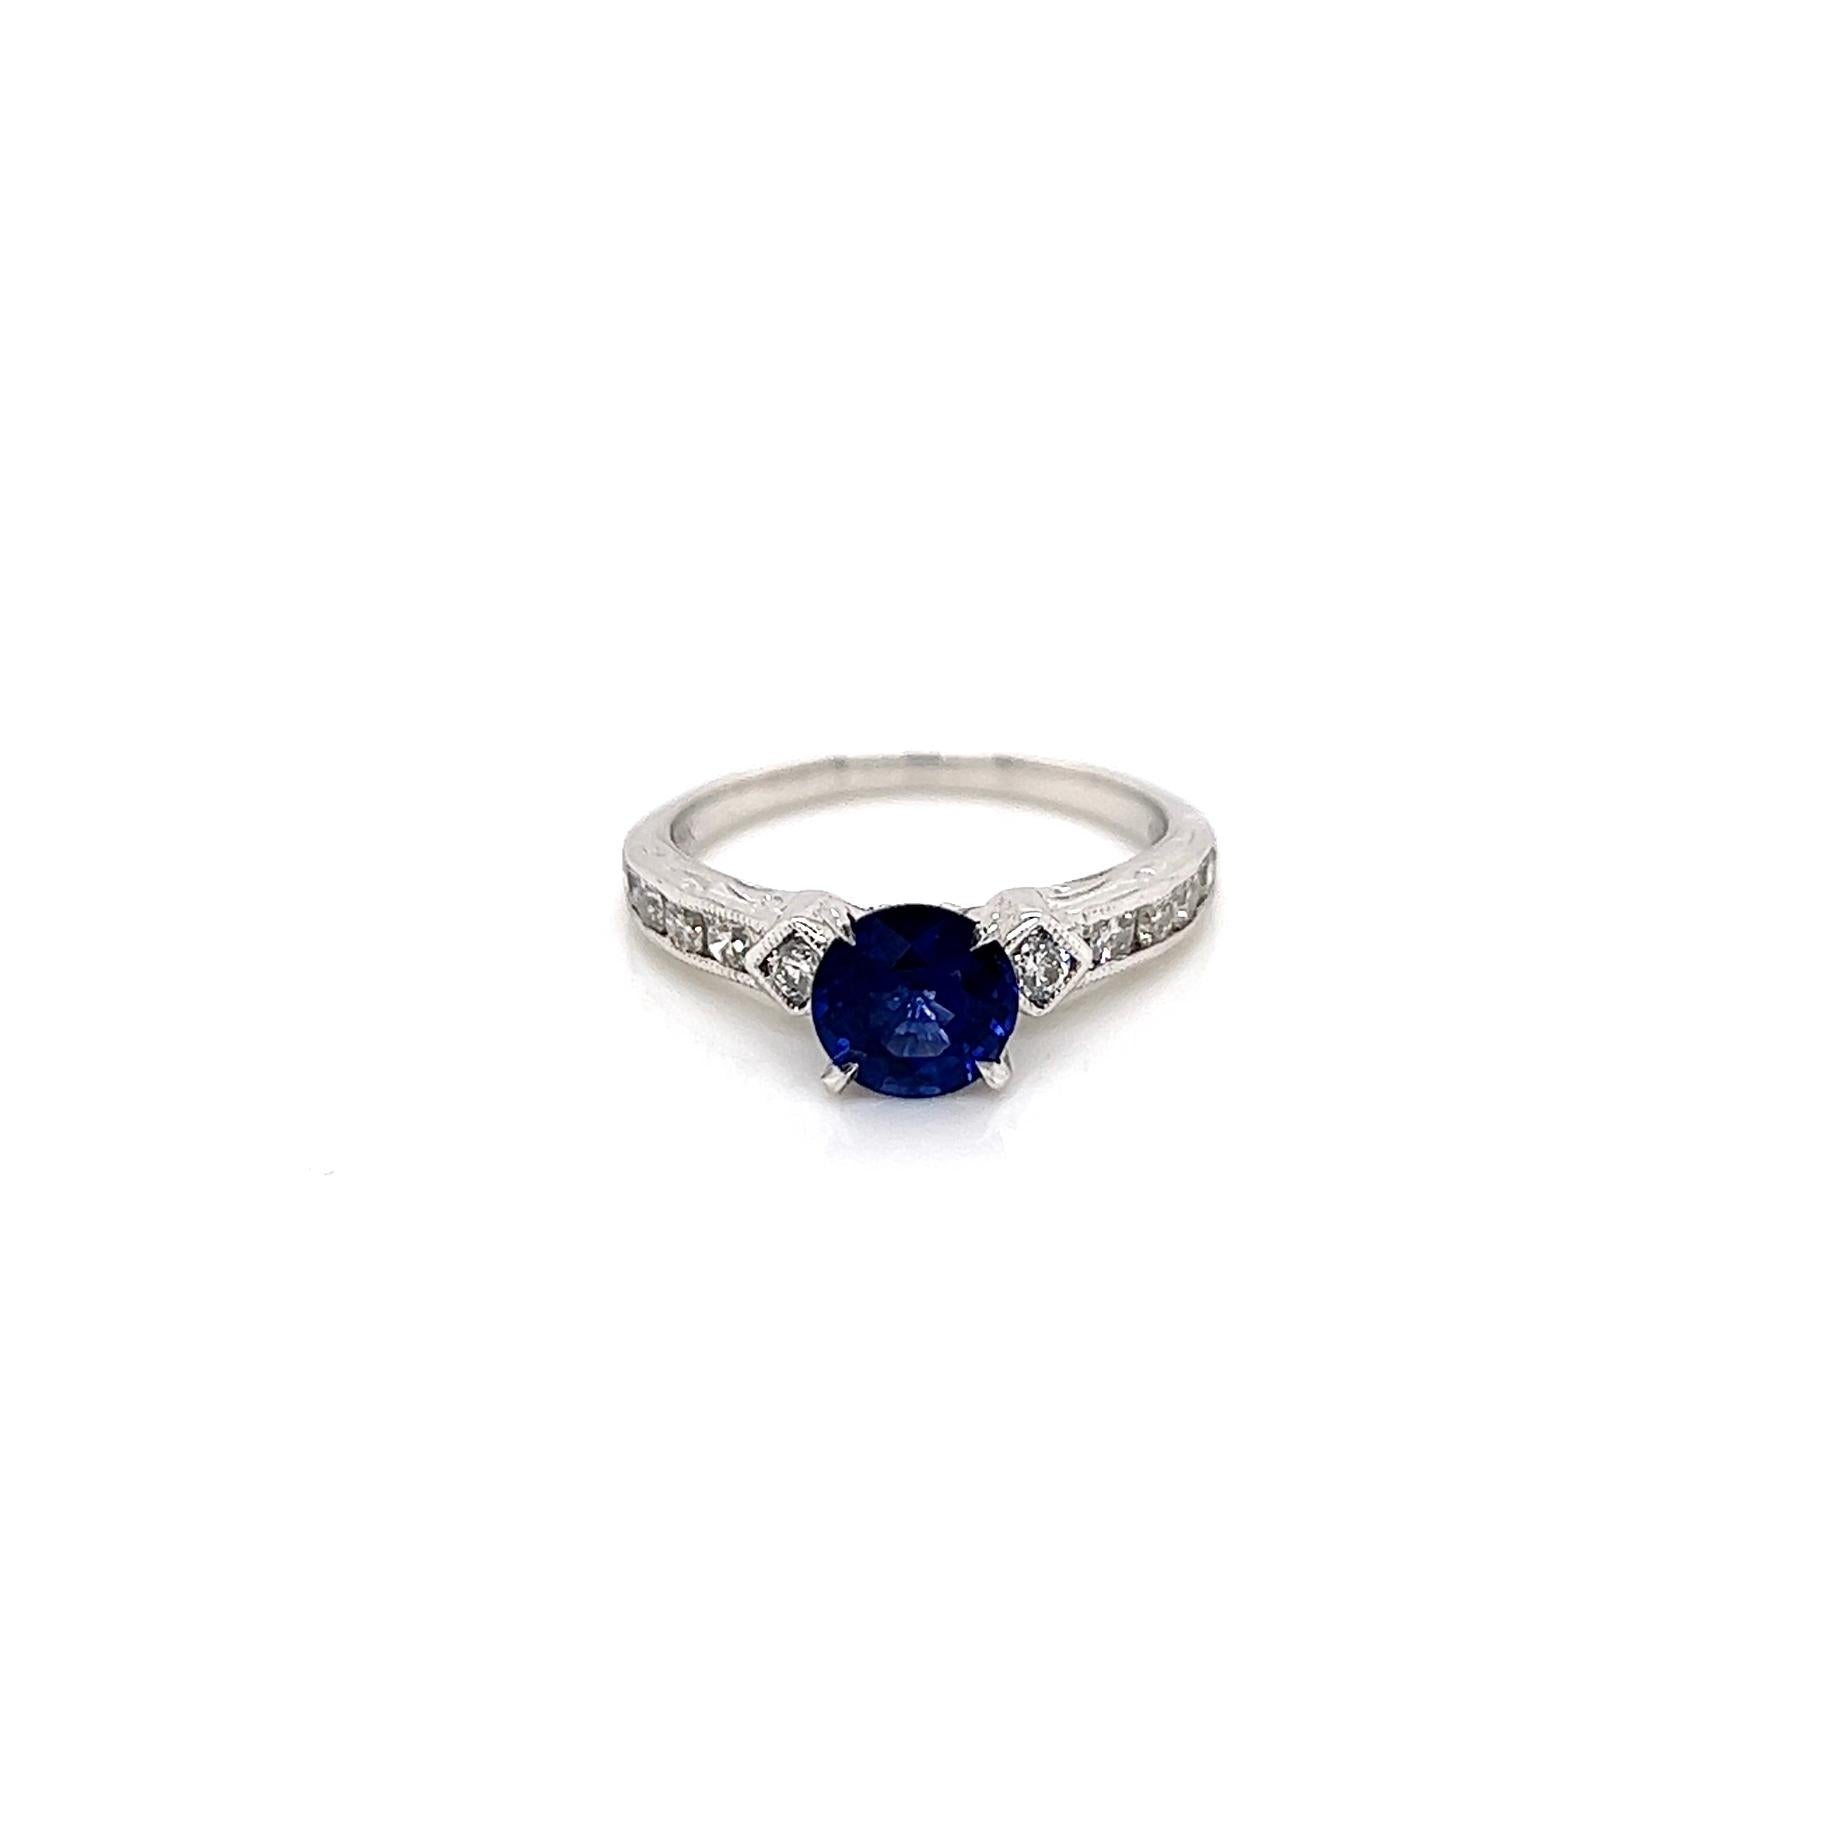 1.24 Total Carat Sapphire Diamond Engagement Ring

-Metal Type: 18K White Gold
-0.99 Carat Round Cut Blue Sapphire
-0.25 Carat Round Side Diamonds 
-Size 4.75

Made in New York City